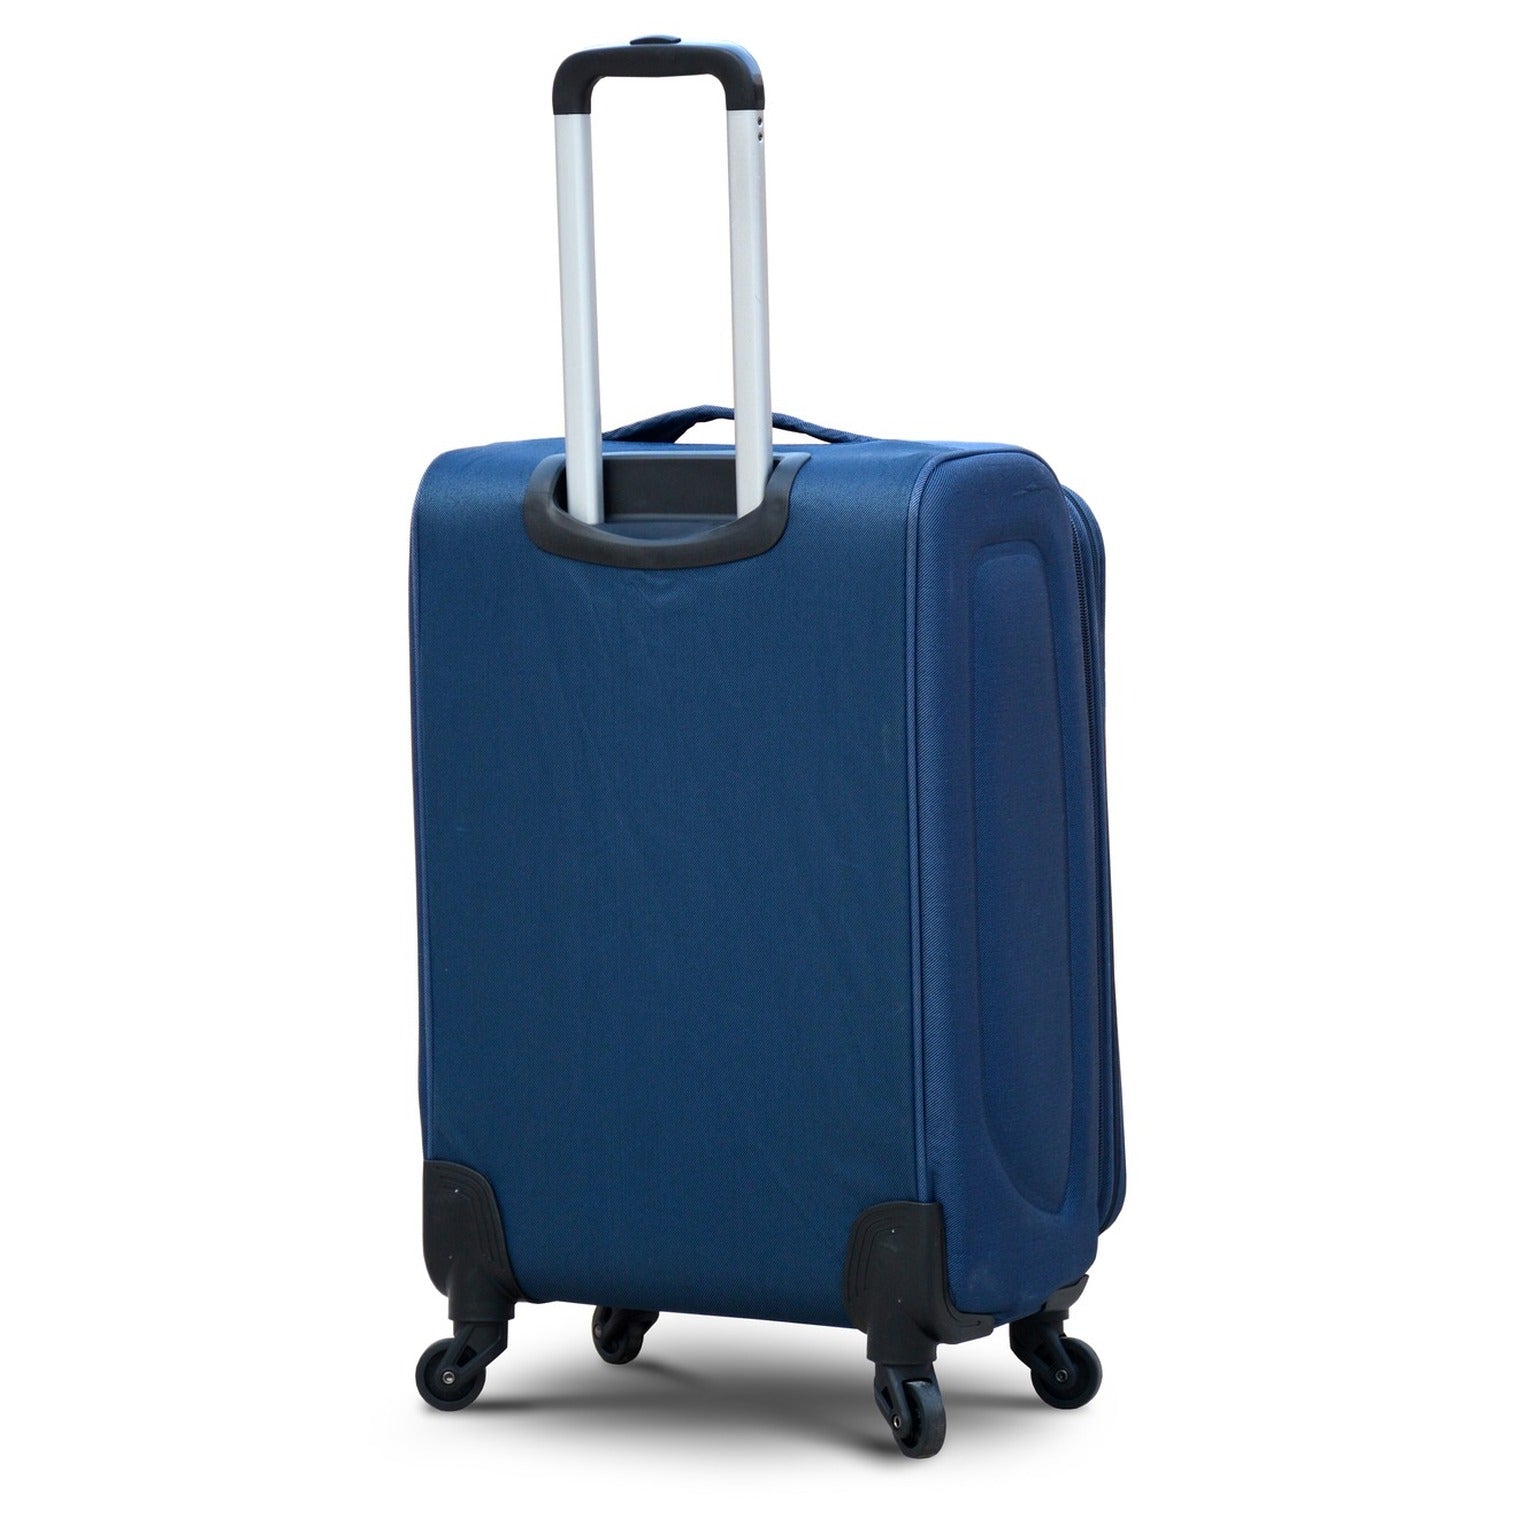 20" Blue Colour SJ JIAN 4 Wheel Luggage Lightweight Soft Material Carry On Trolley Bag